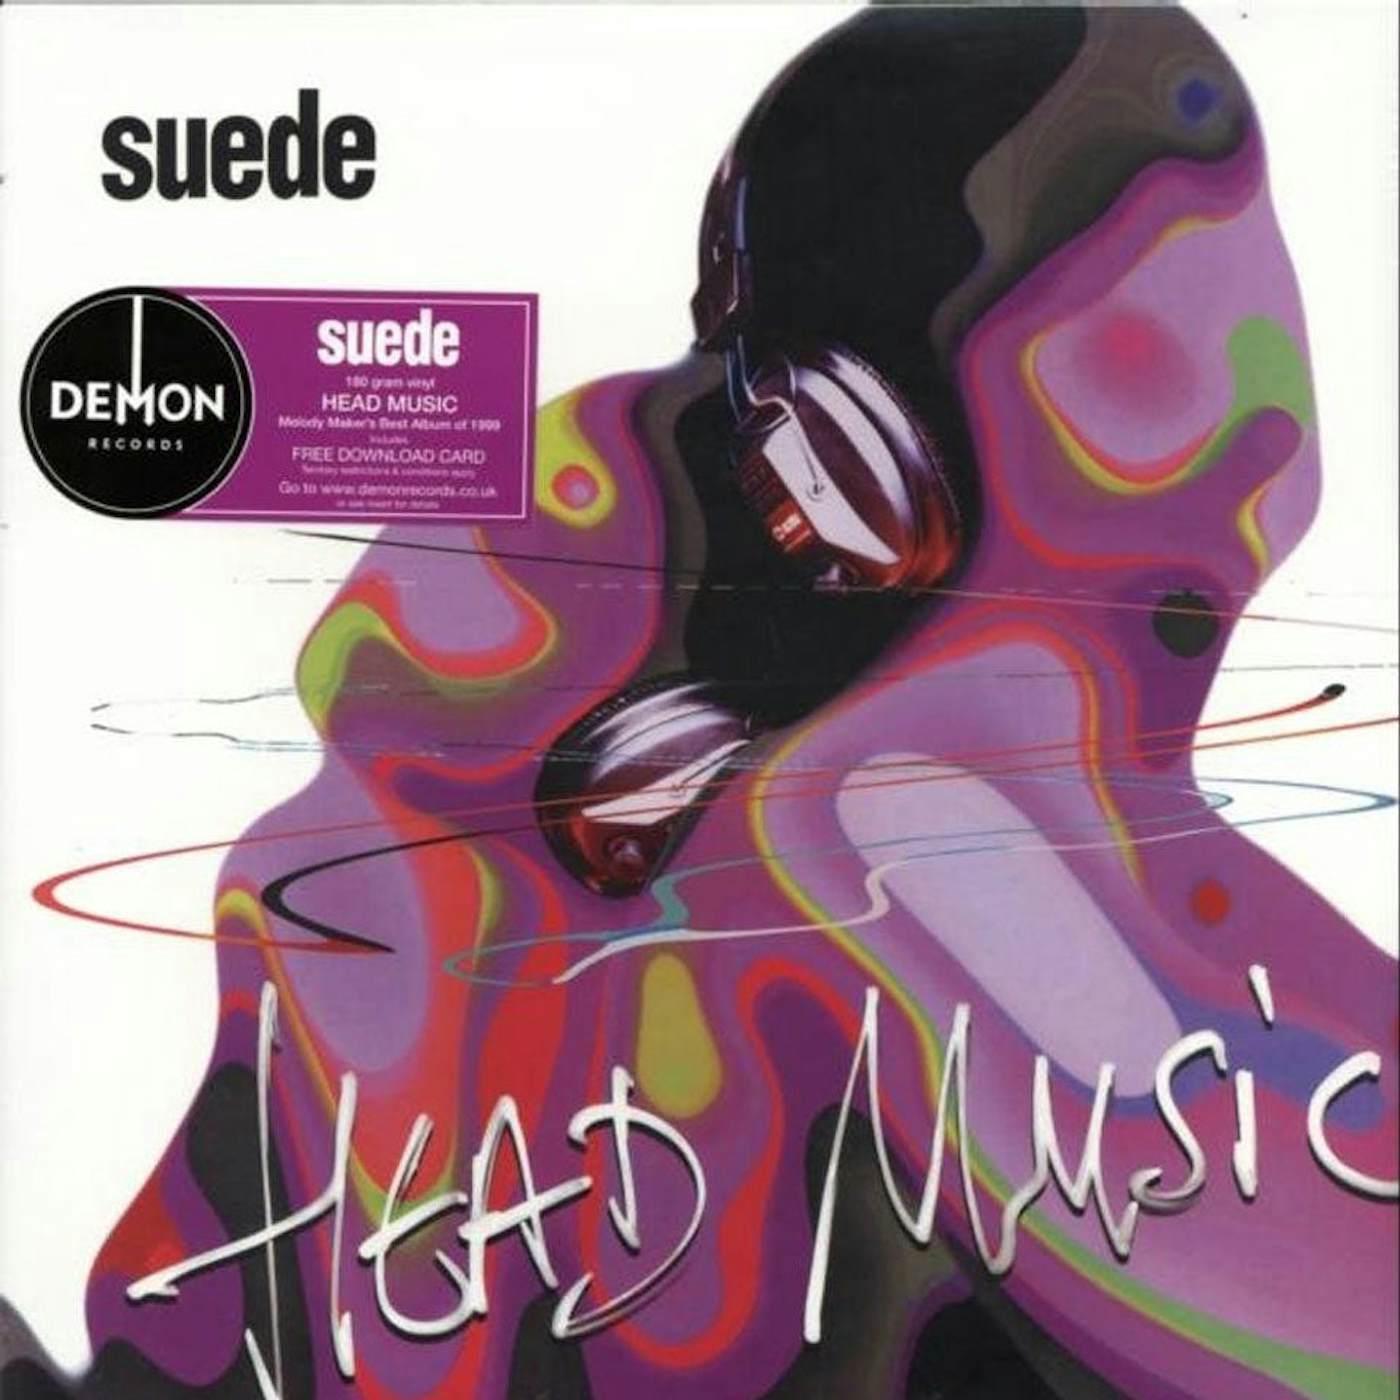 Suede LP Vinyl Record - Head Music